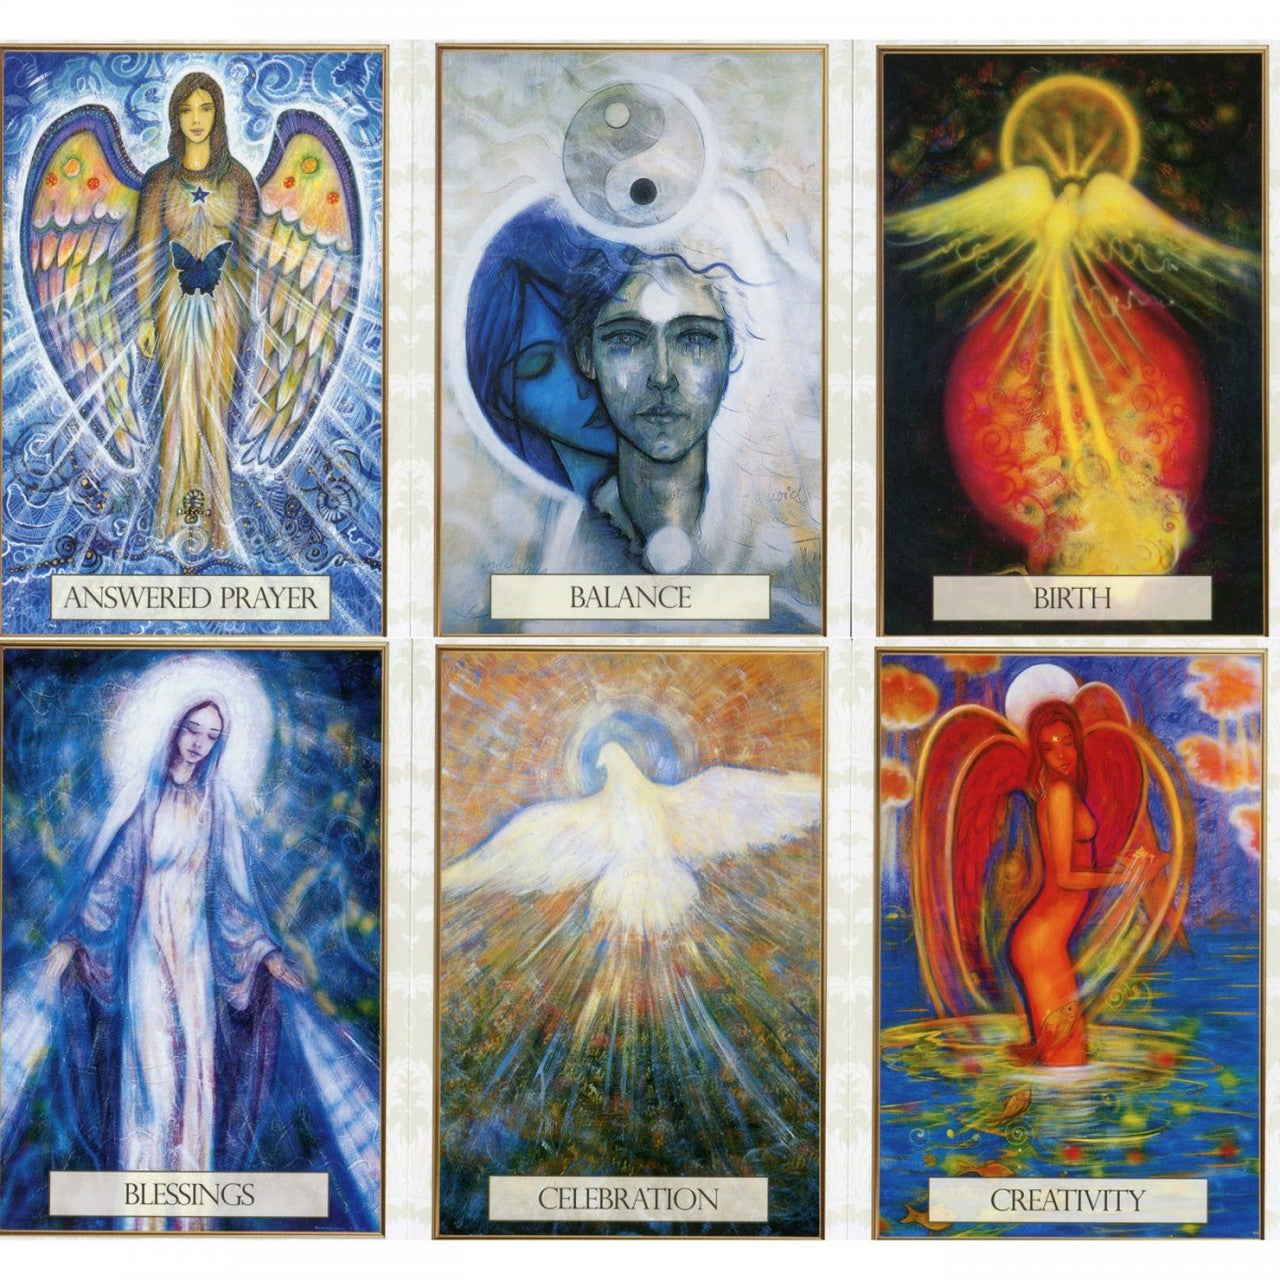 Universal Love Healing Oracle Cards; Toni Carmine Salerno